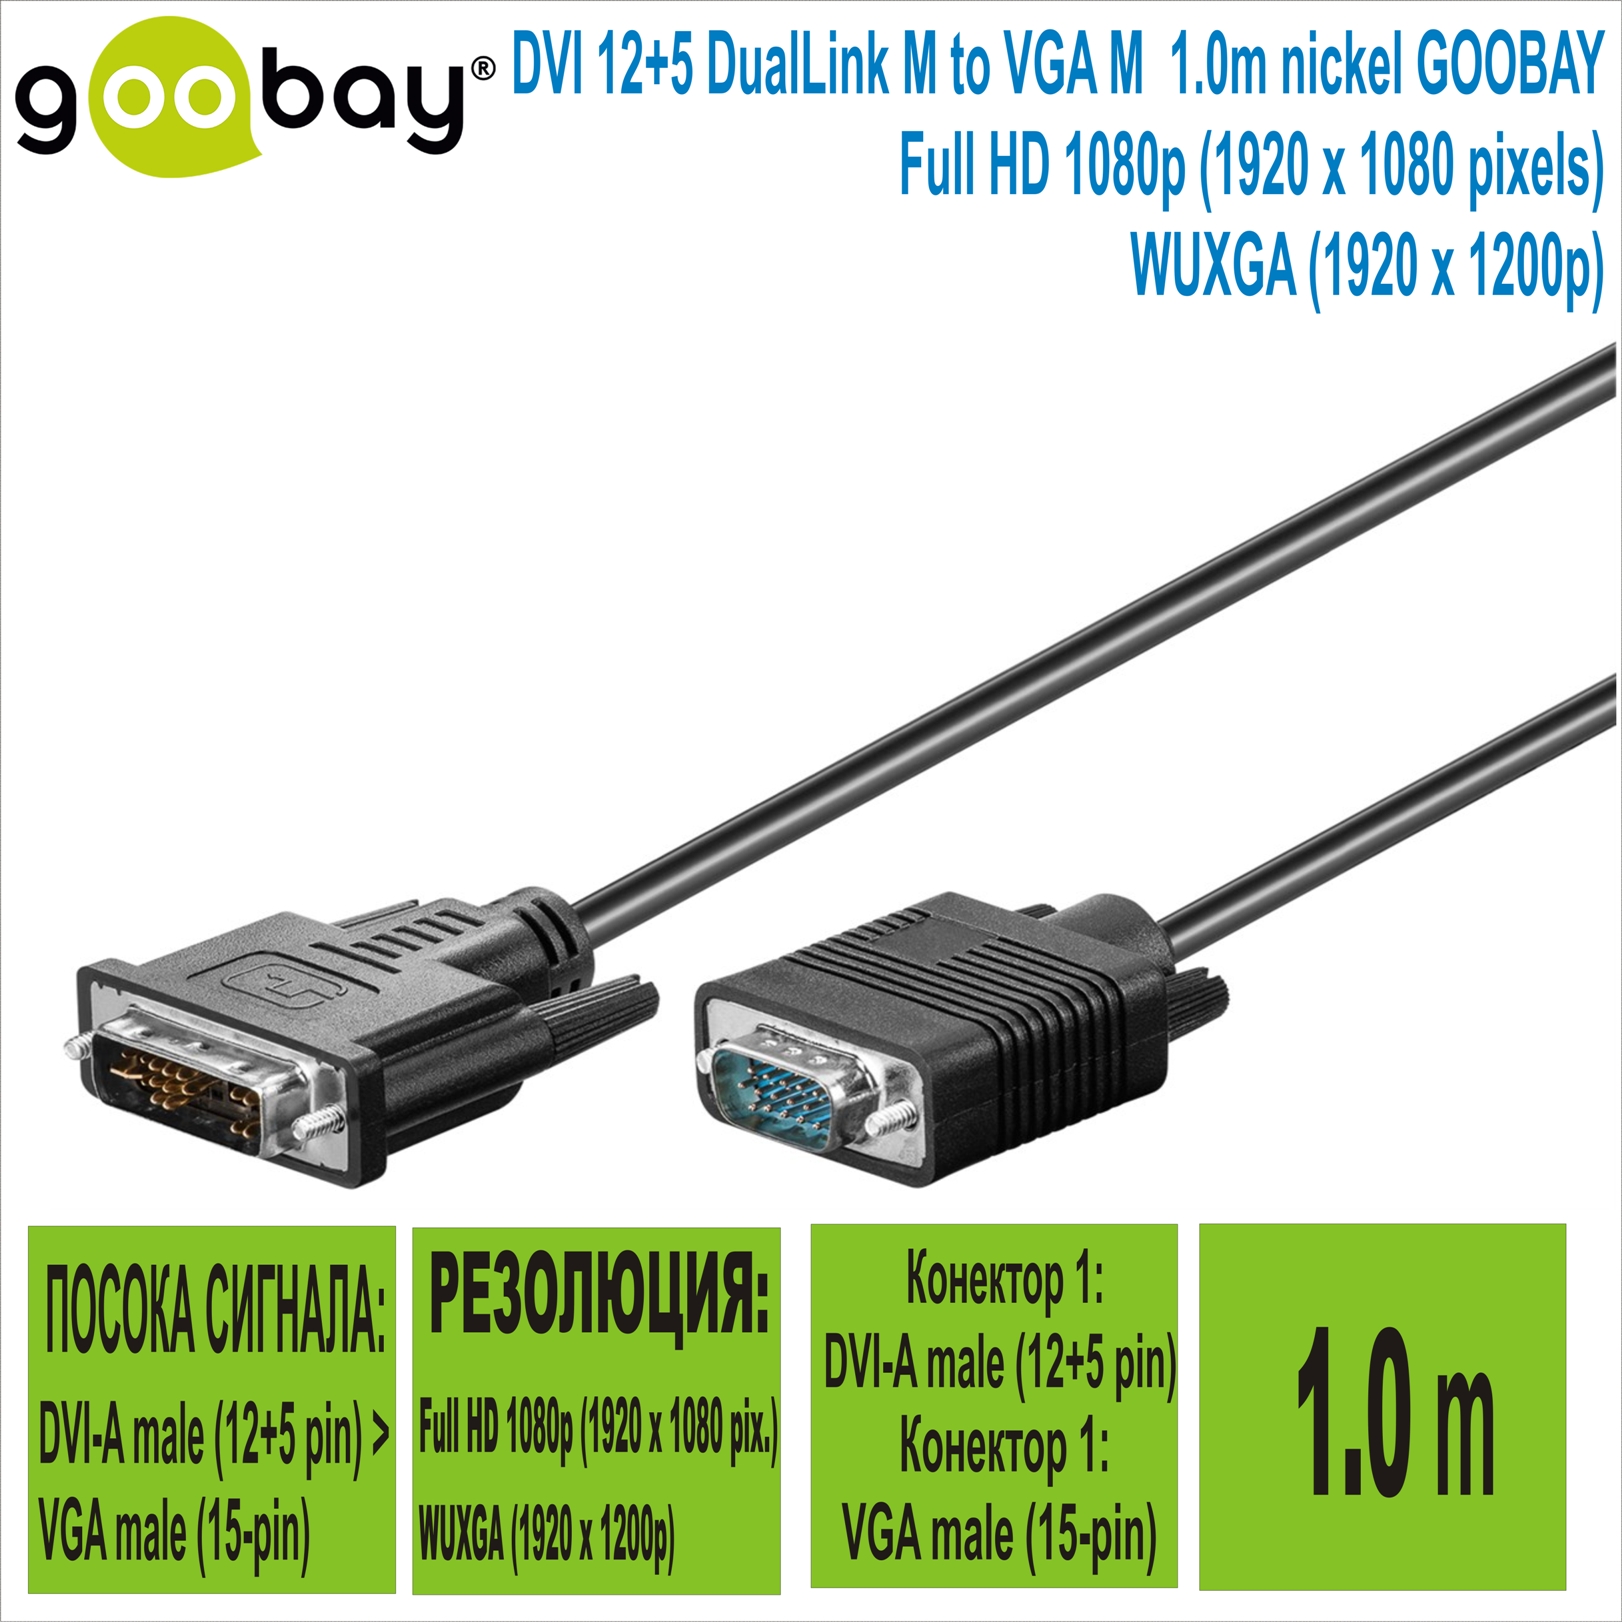 DVI 24+5 DualLink M to VGA M  1.0m nickel GOOBAY